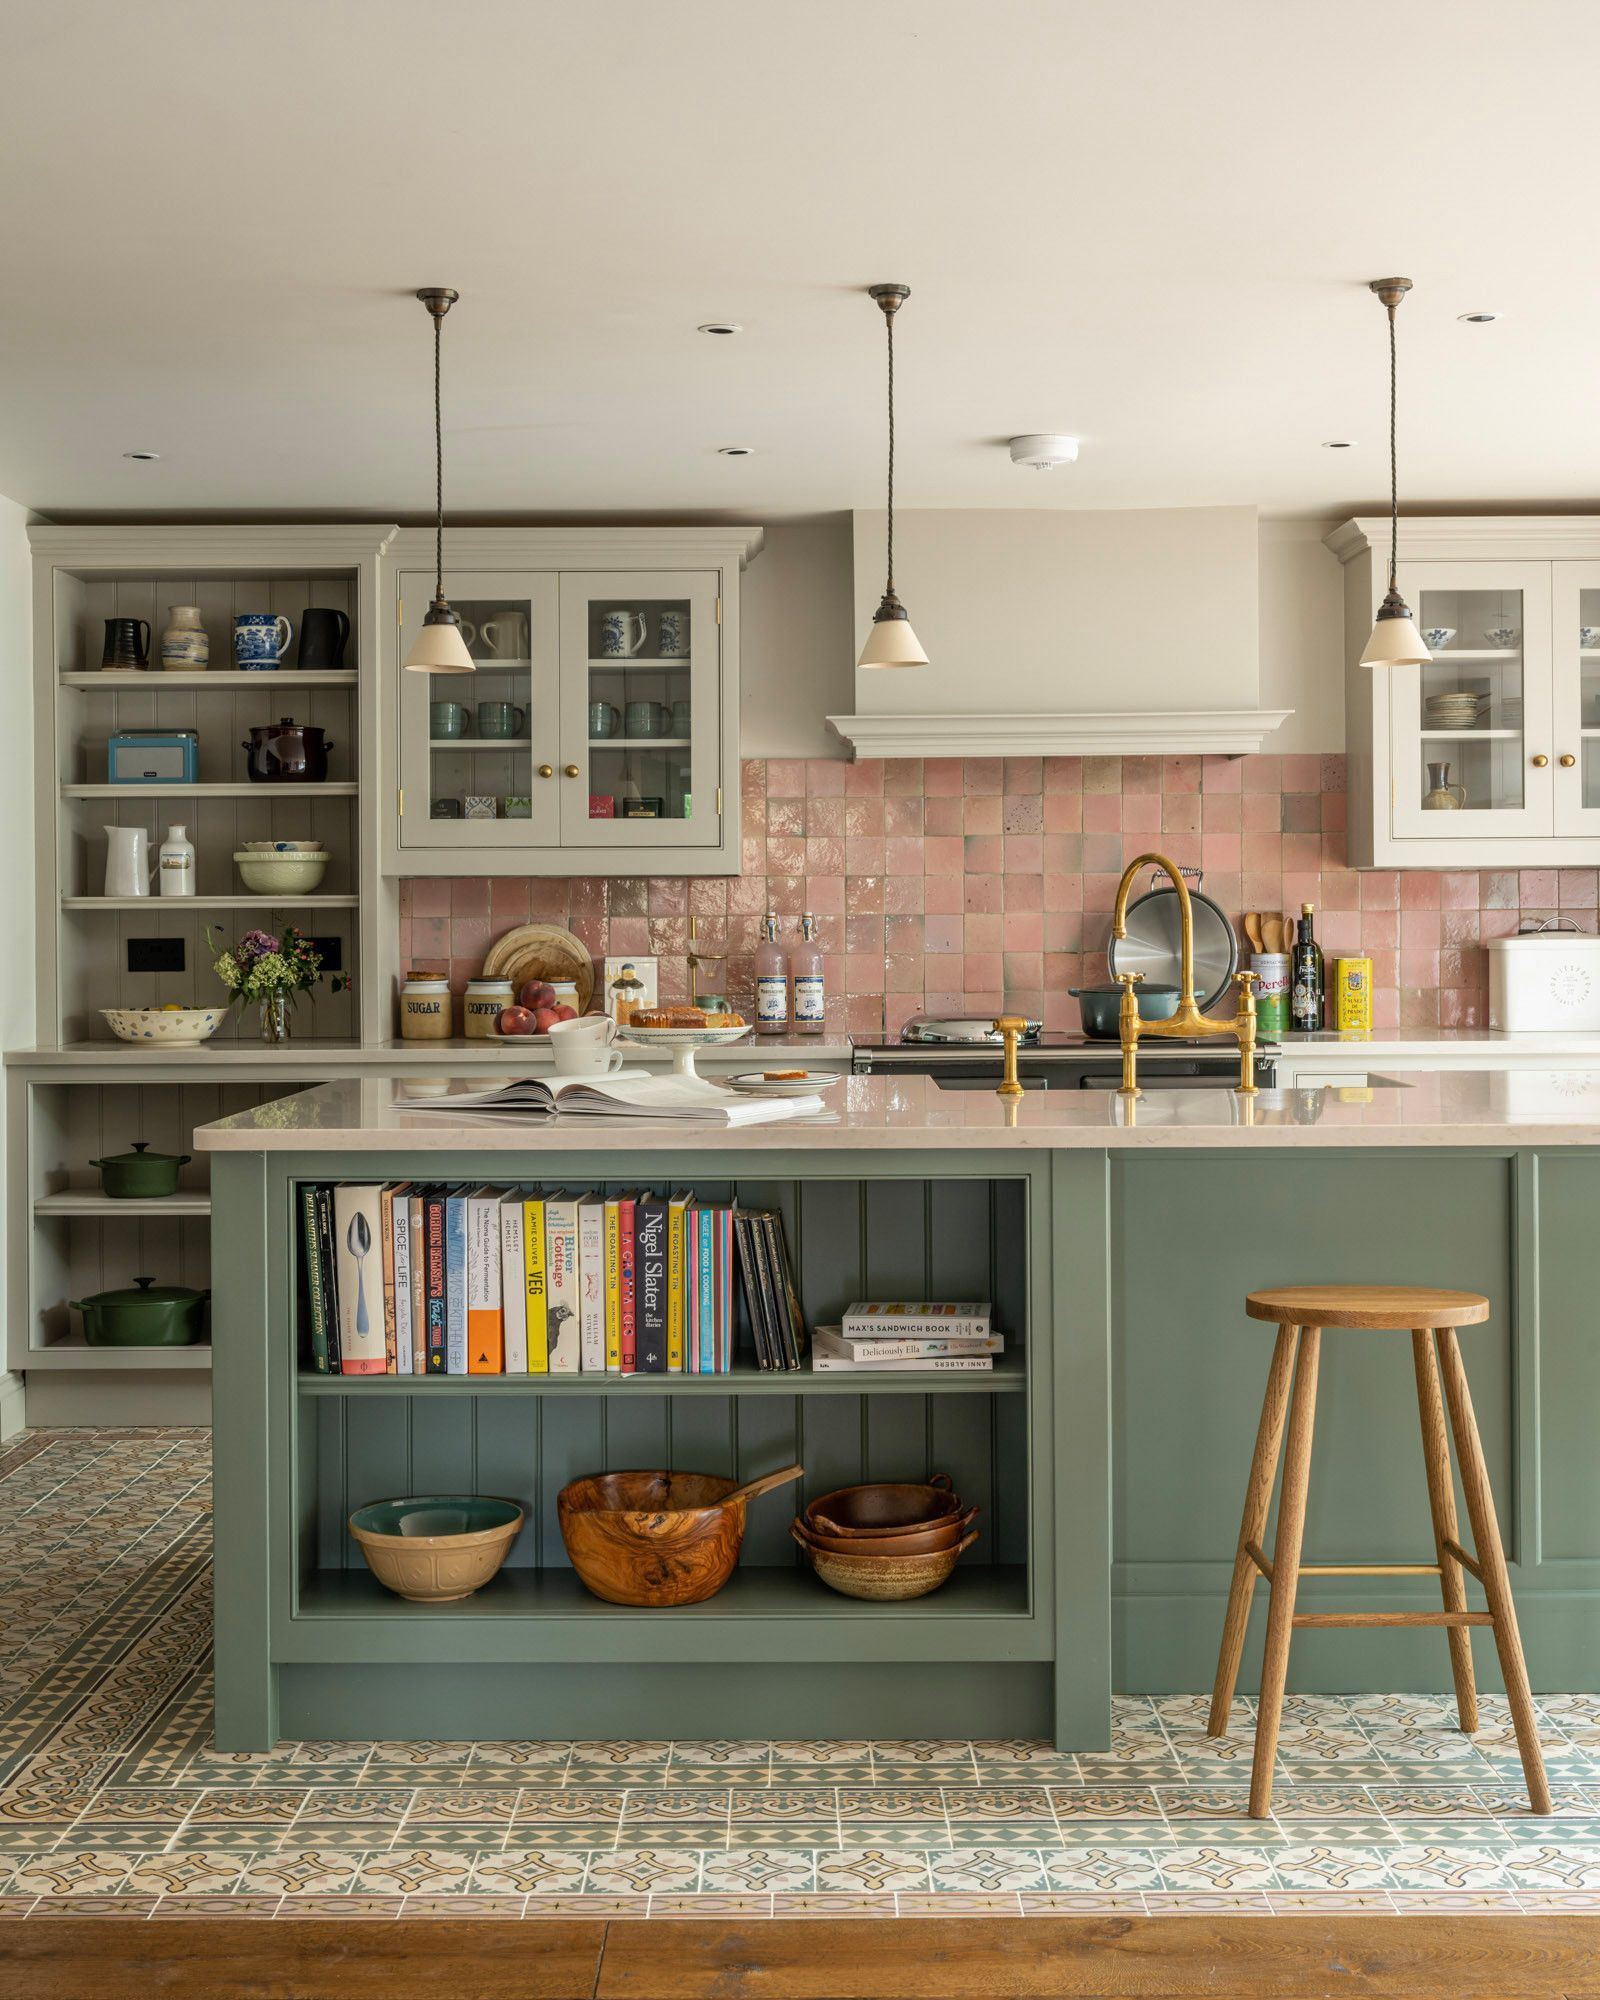 Trendy Kitchen Backsplash Tile Designs to
Elevate Your Space